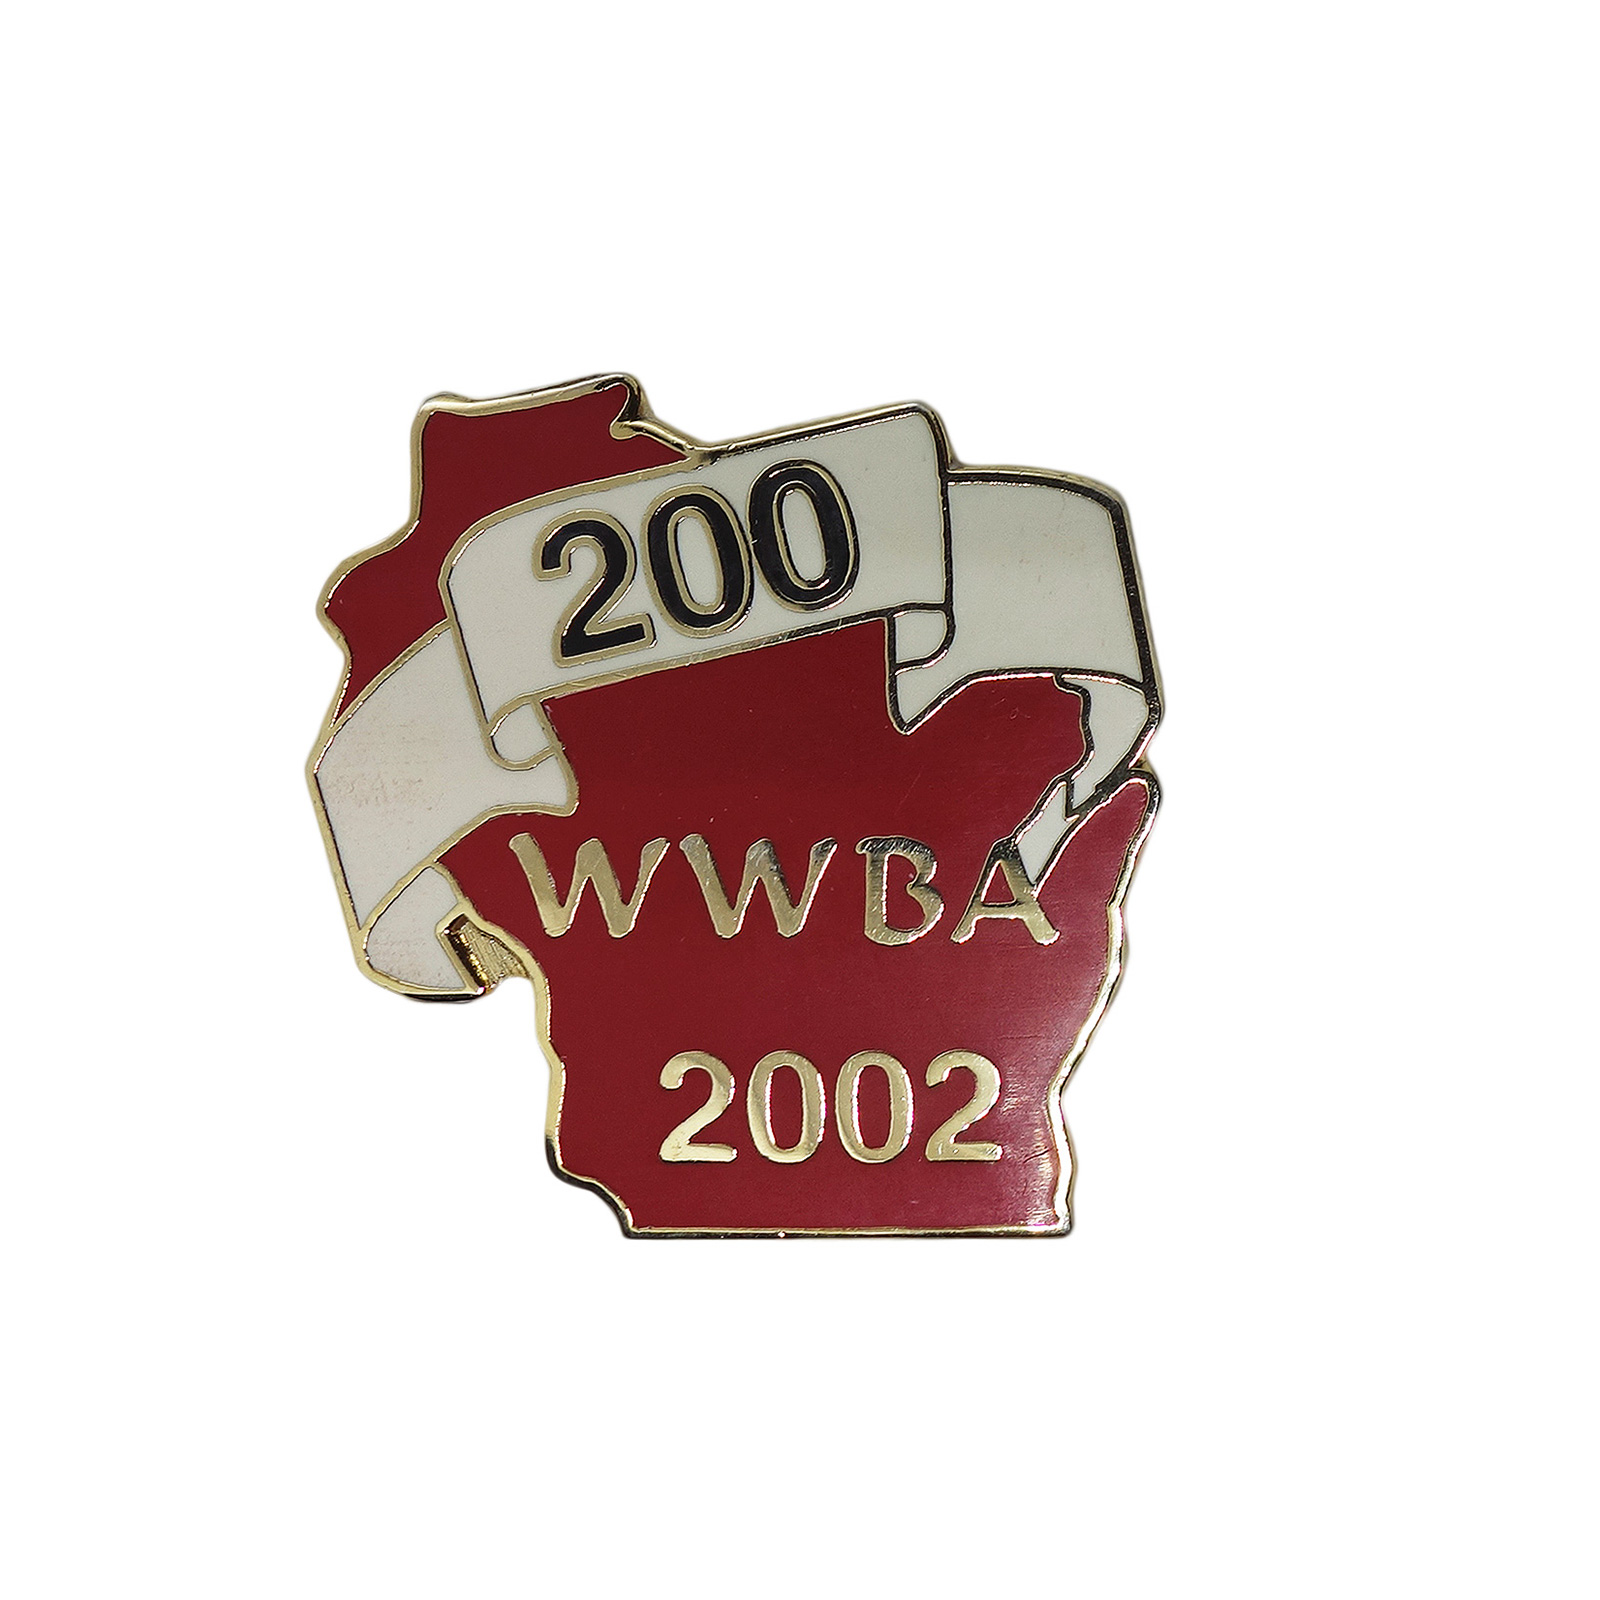 WWBA ボウリング 200 ピンズ ウィスコンシン州 地図型 留め具付き